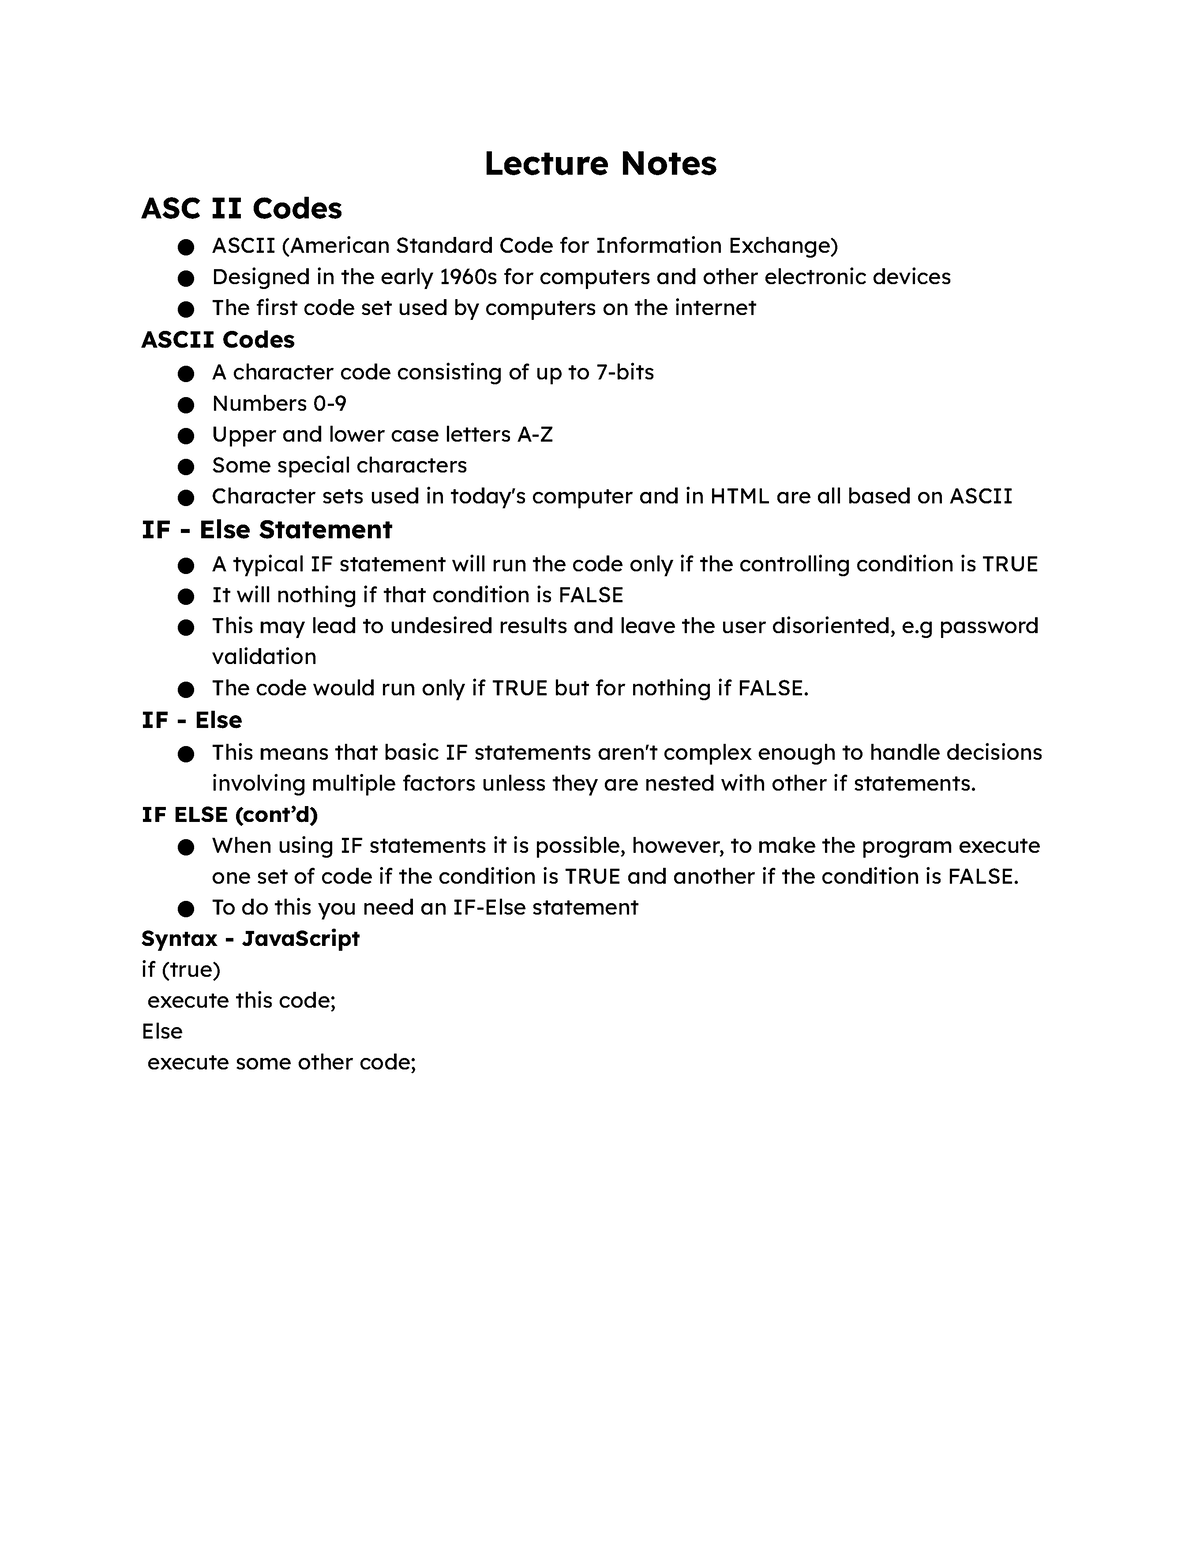 ascii-codes-9-27-lecture-notes-asc-ii-codes-ascii-american